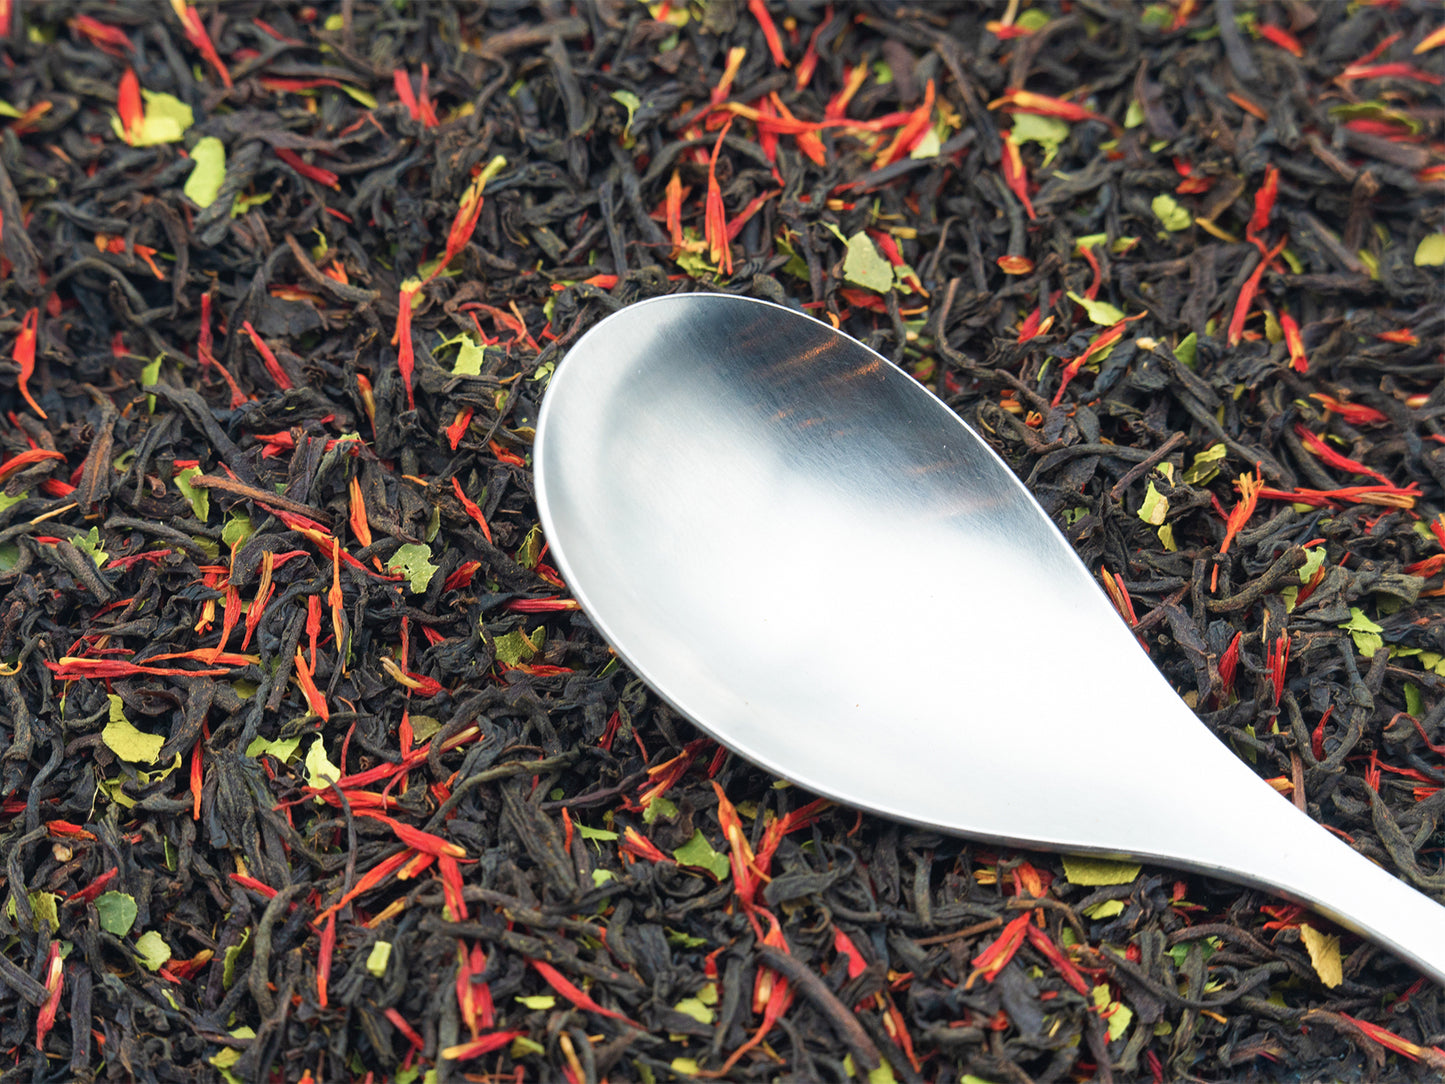 TEA23 loose Earl Grey tea with a spoon resting on top